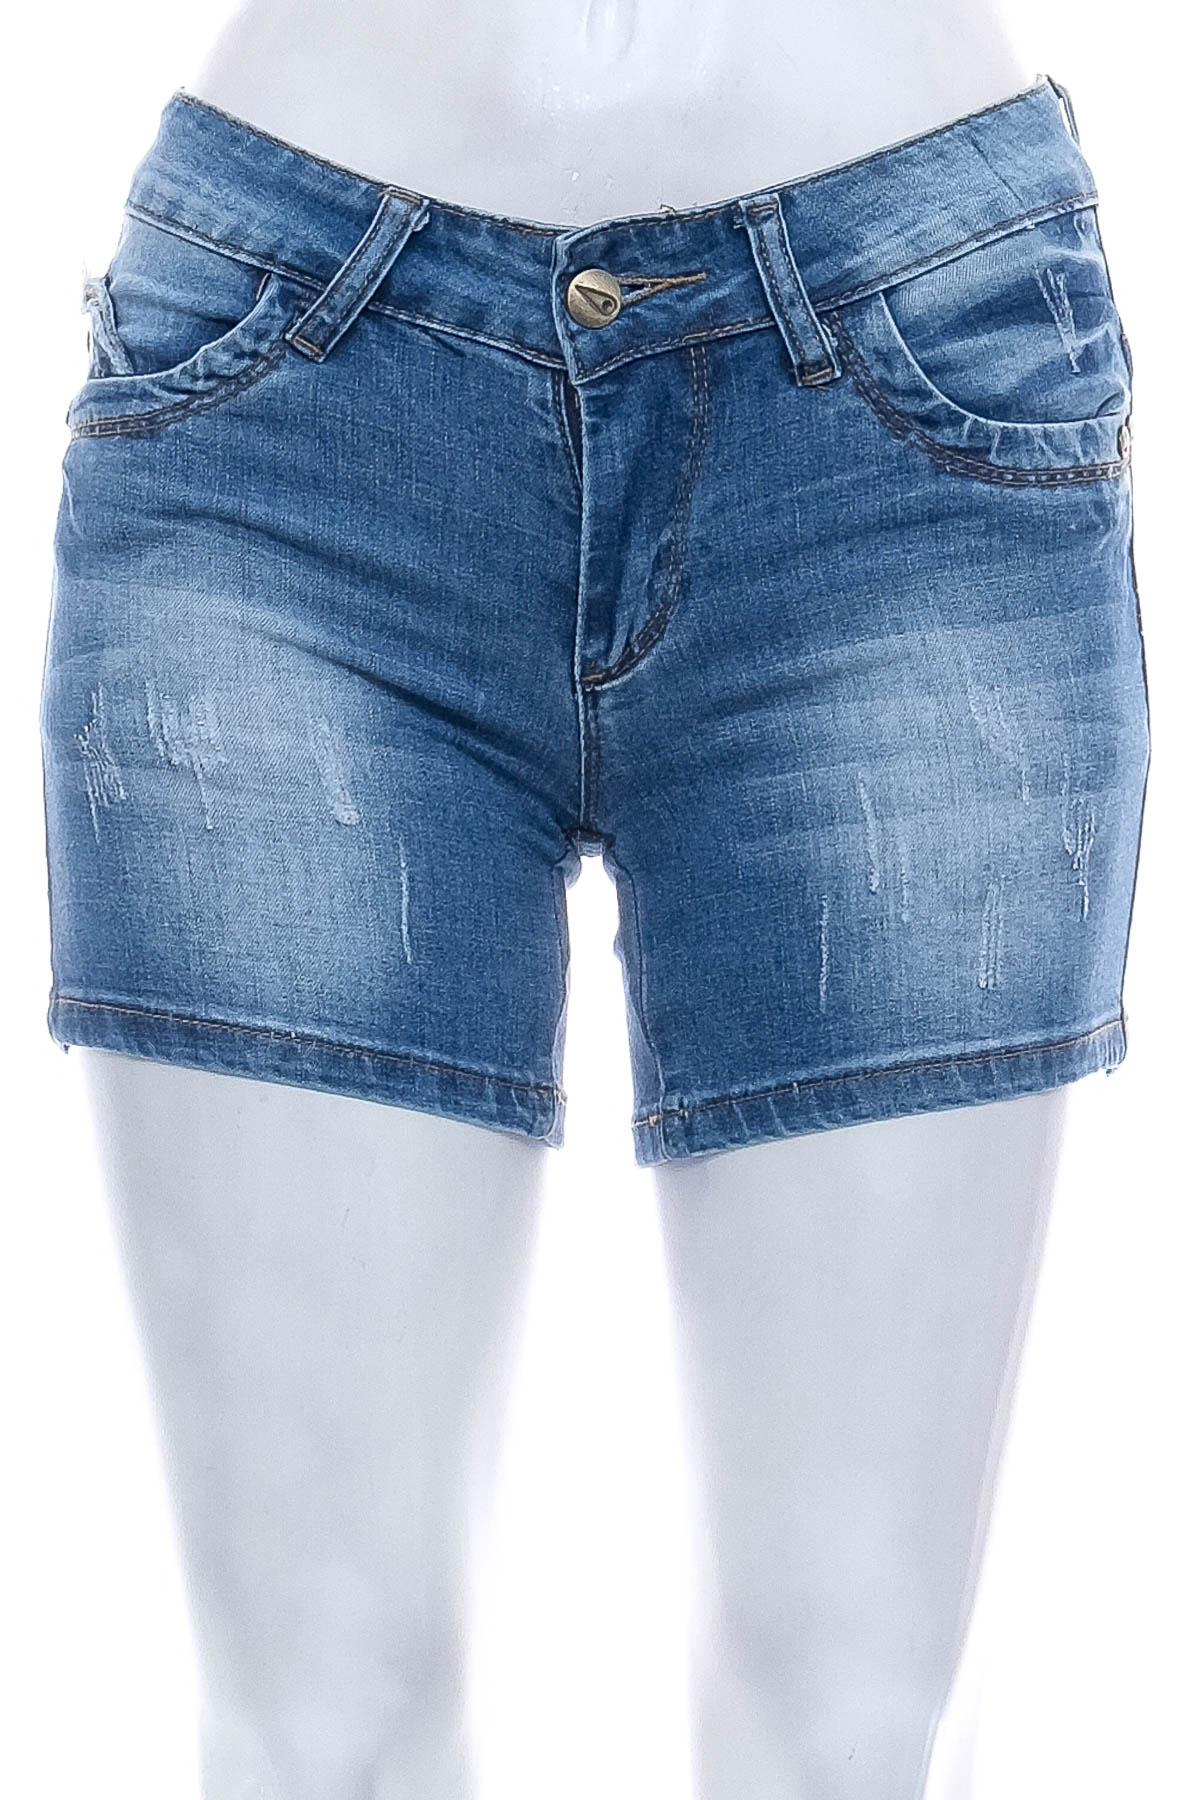 Female shorts - LJY - 0